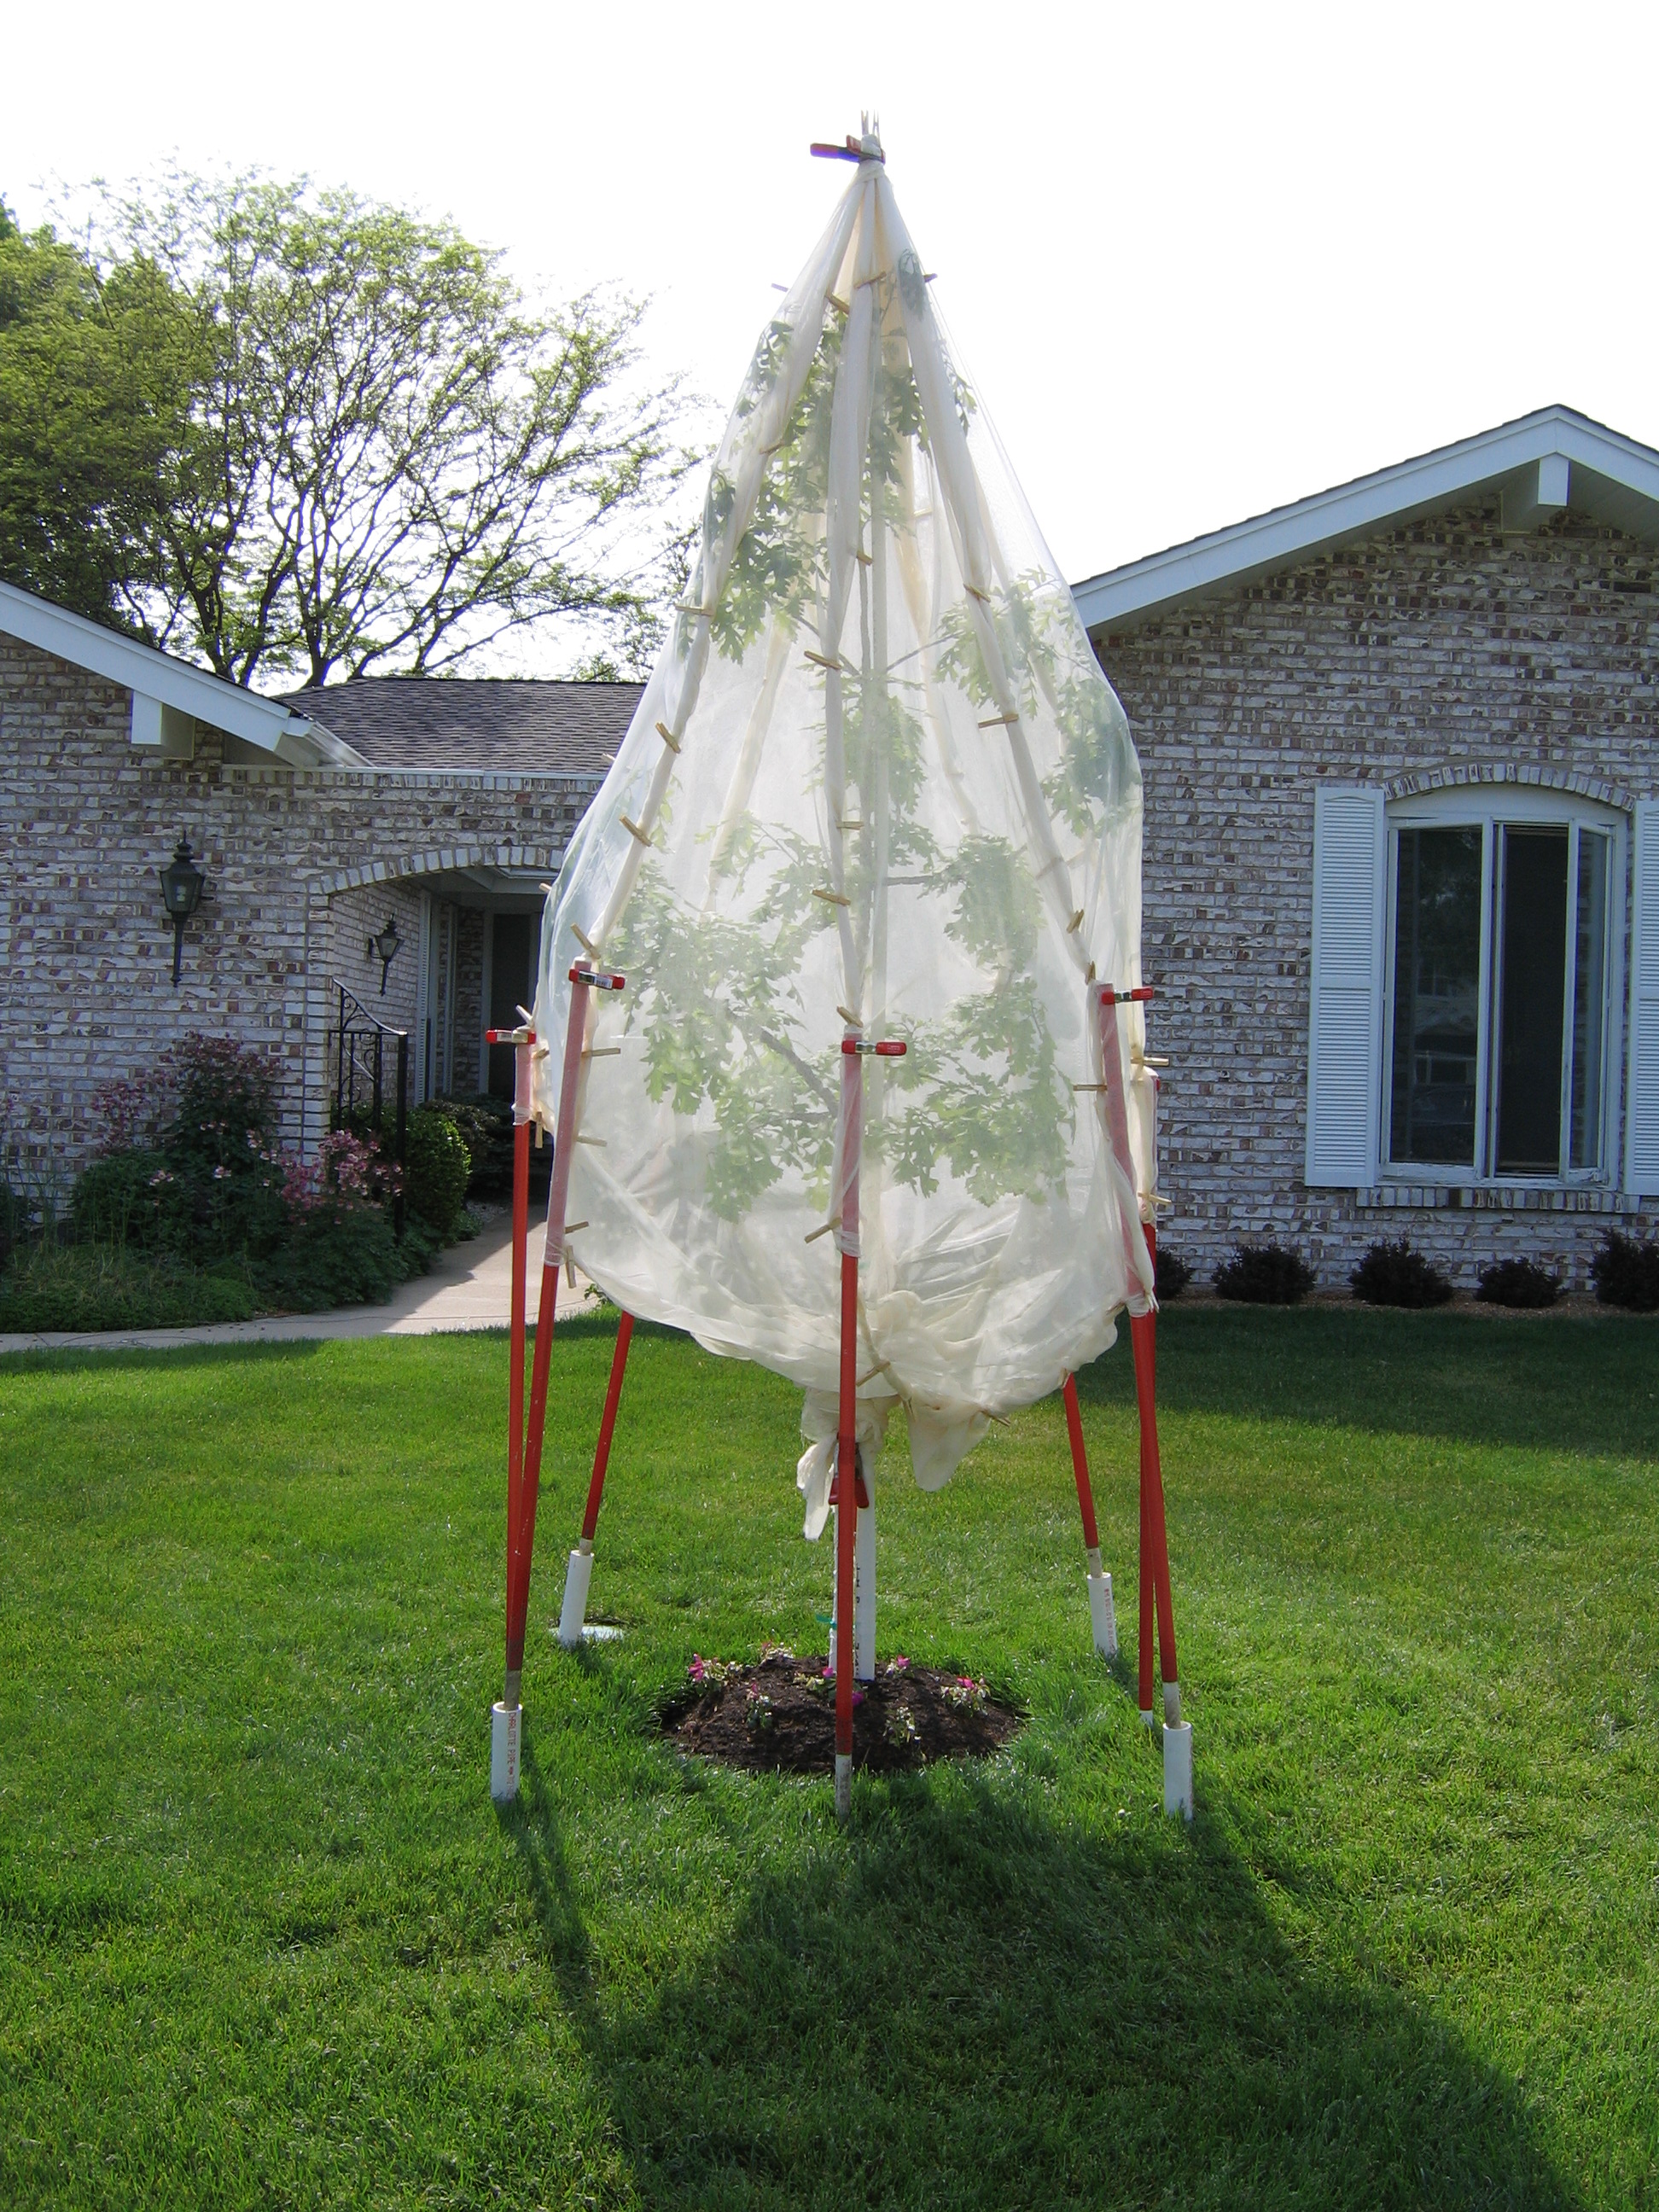 Oak sapling enclosed in mesh fabric to deter cicadas